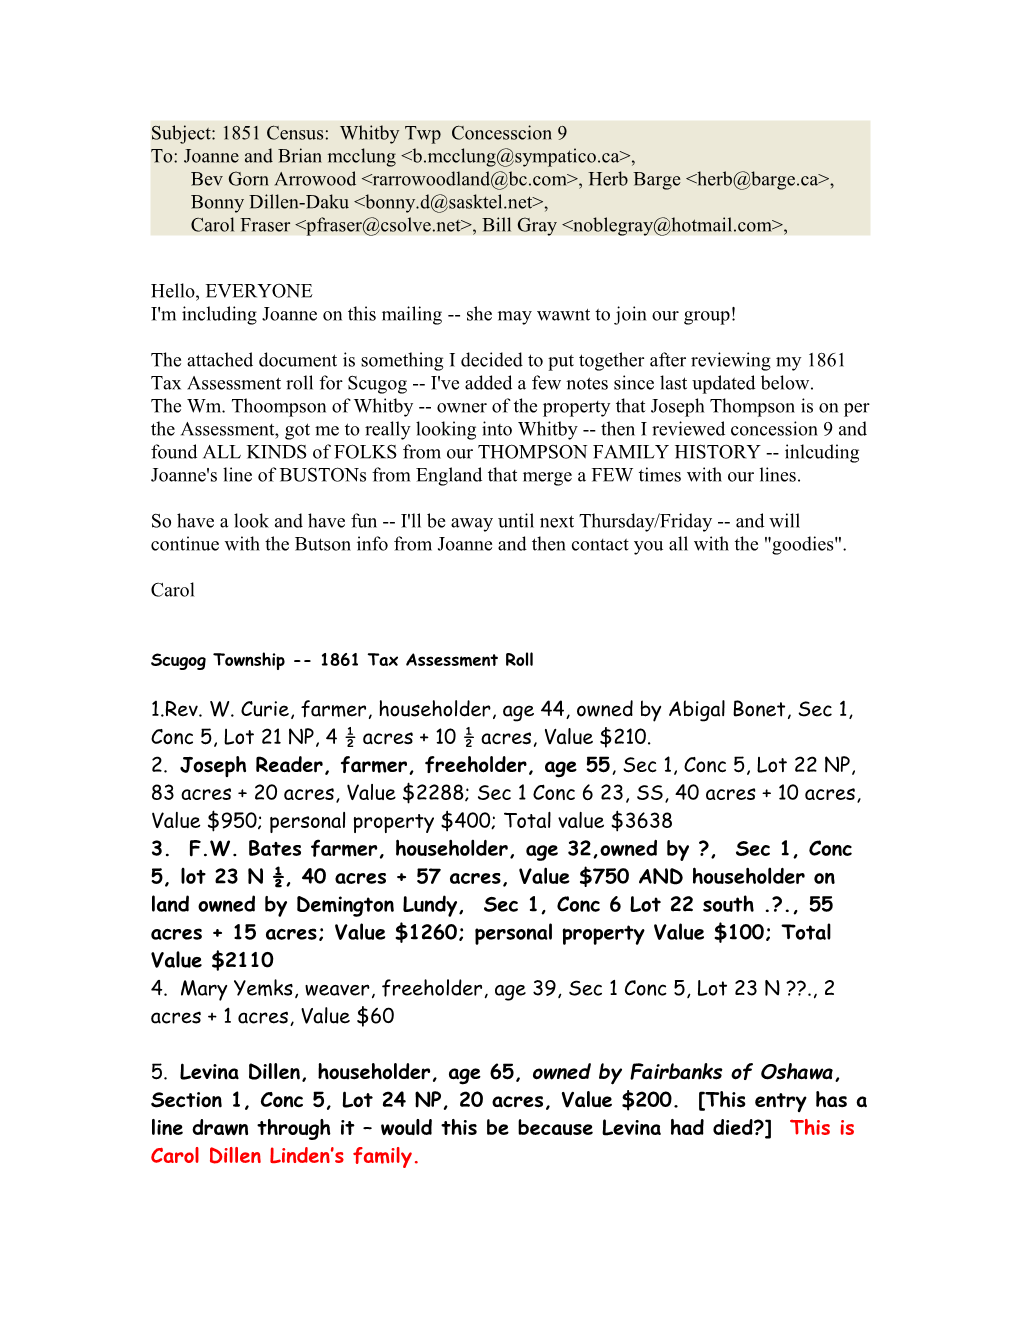 Scugog Township 1861 Tax Assessment Roll